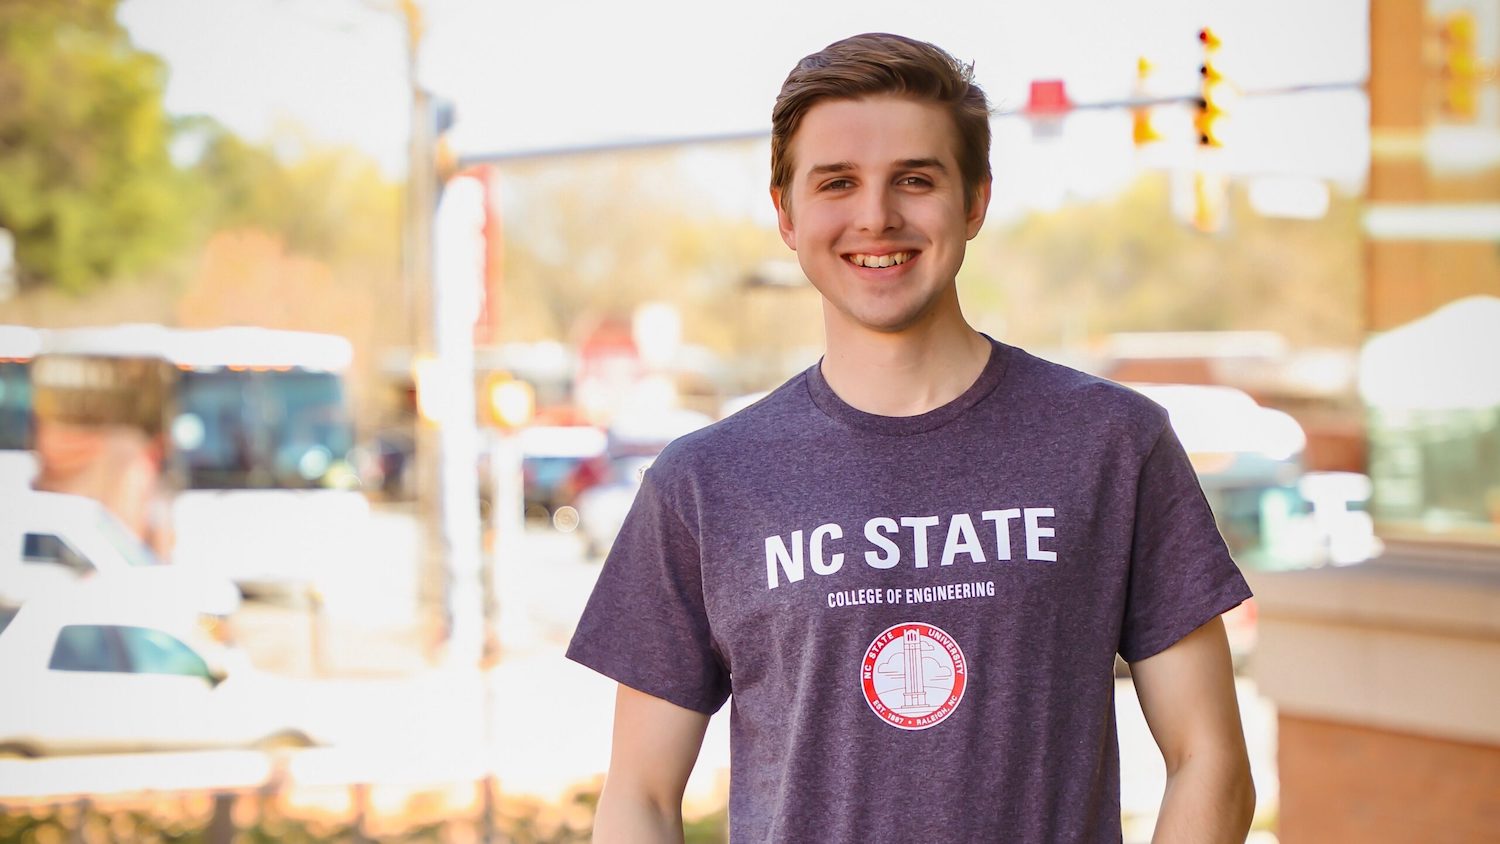 Shaun Deardorff wearing an NC State T-shirt